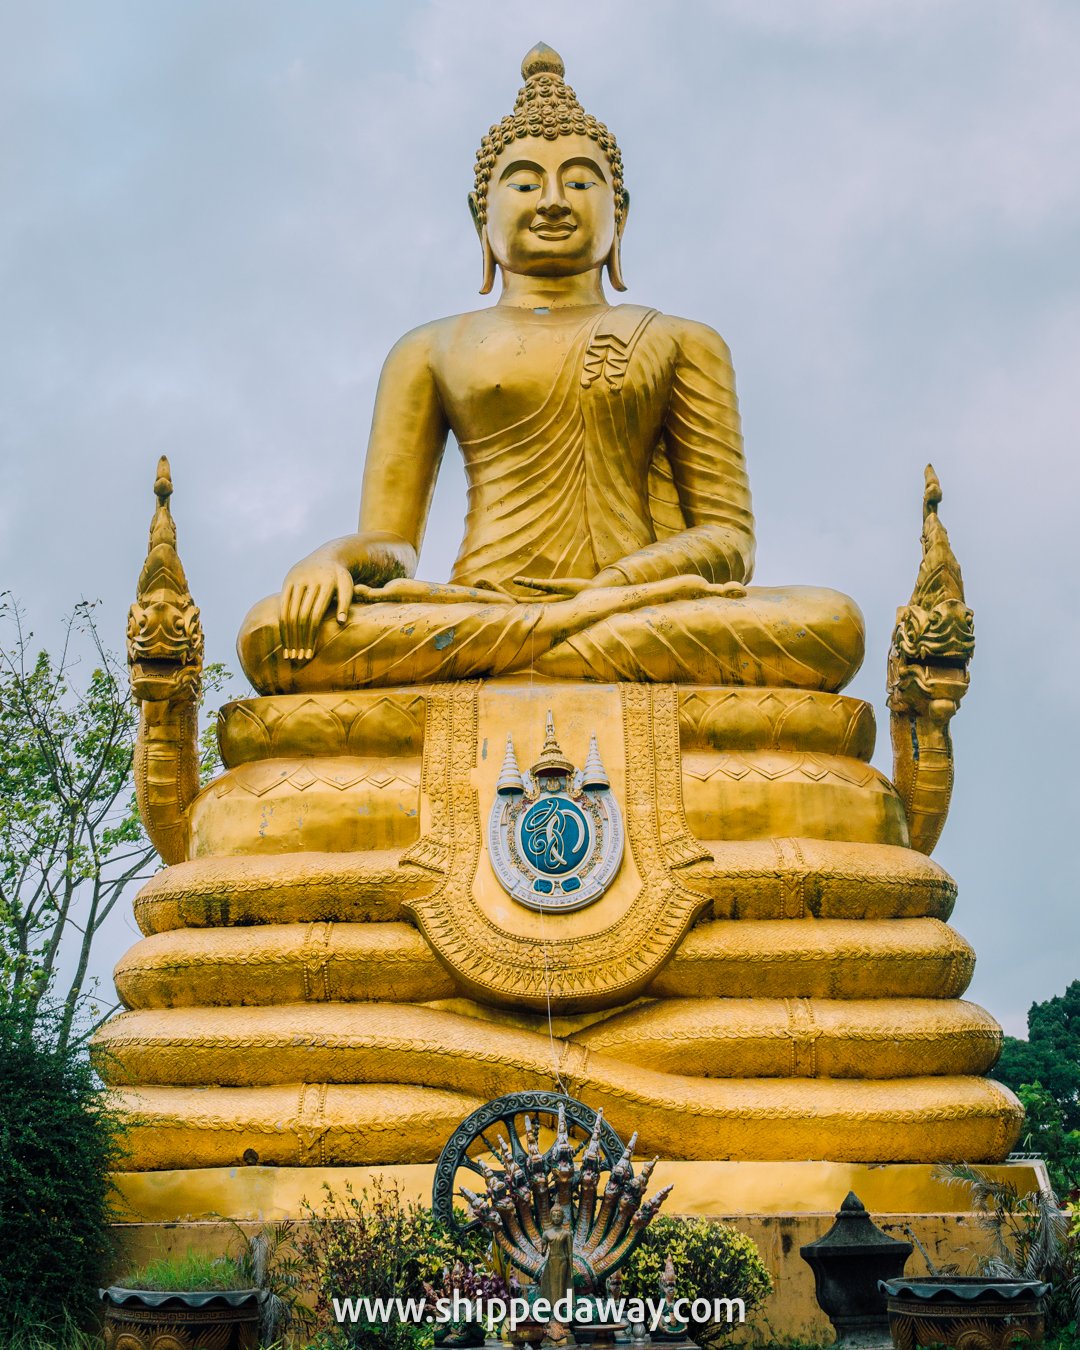 Golden Buddha statue at Big Buddha, Phuket, Thailand